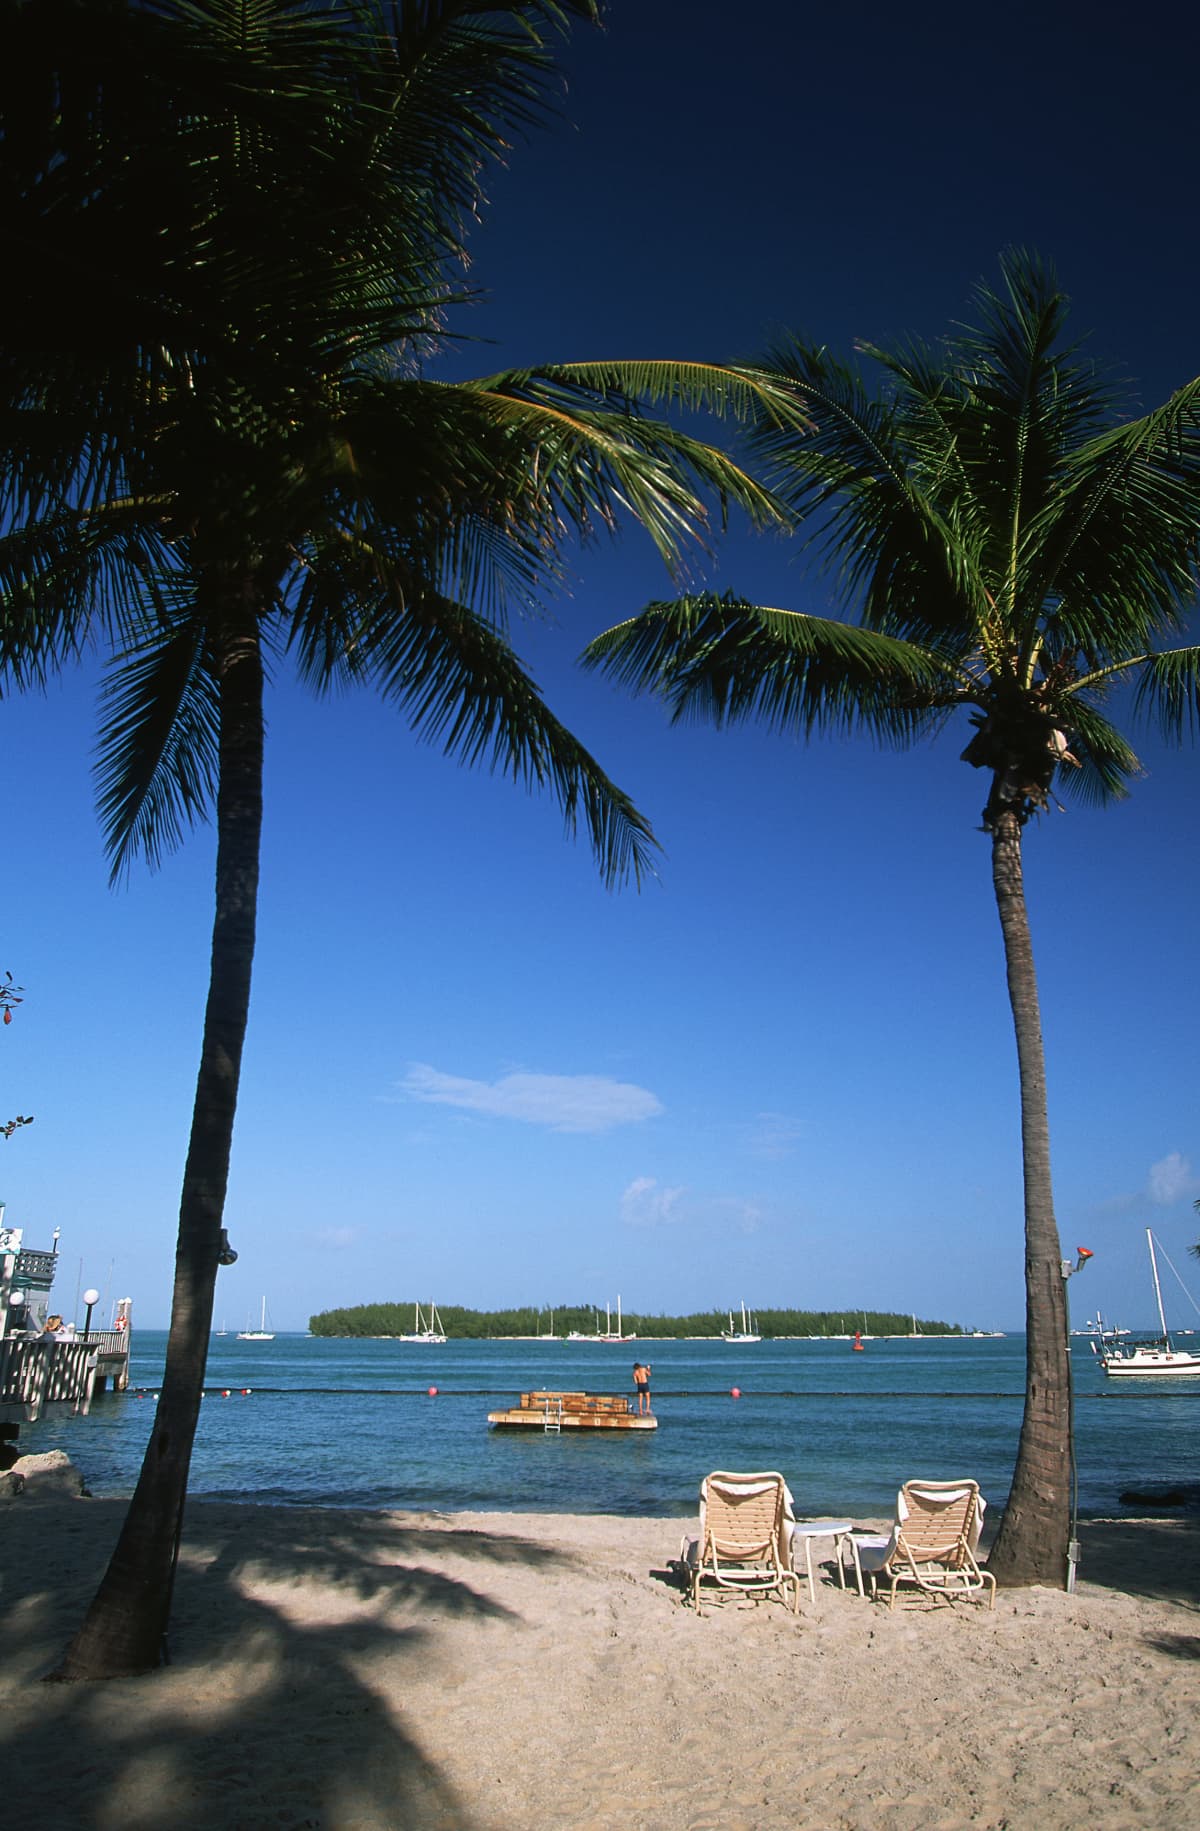 Key West beach with palm trees